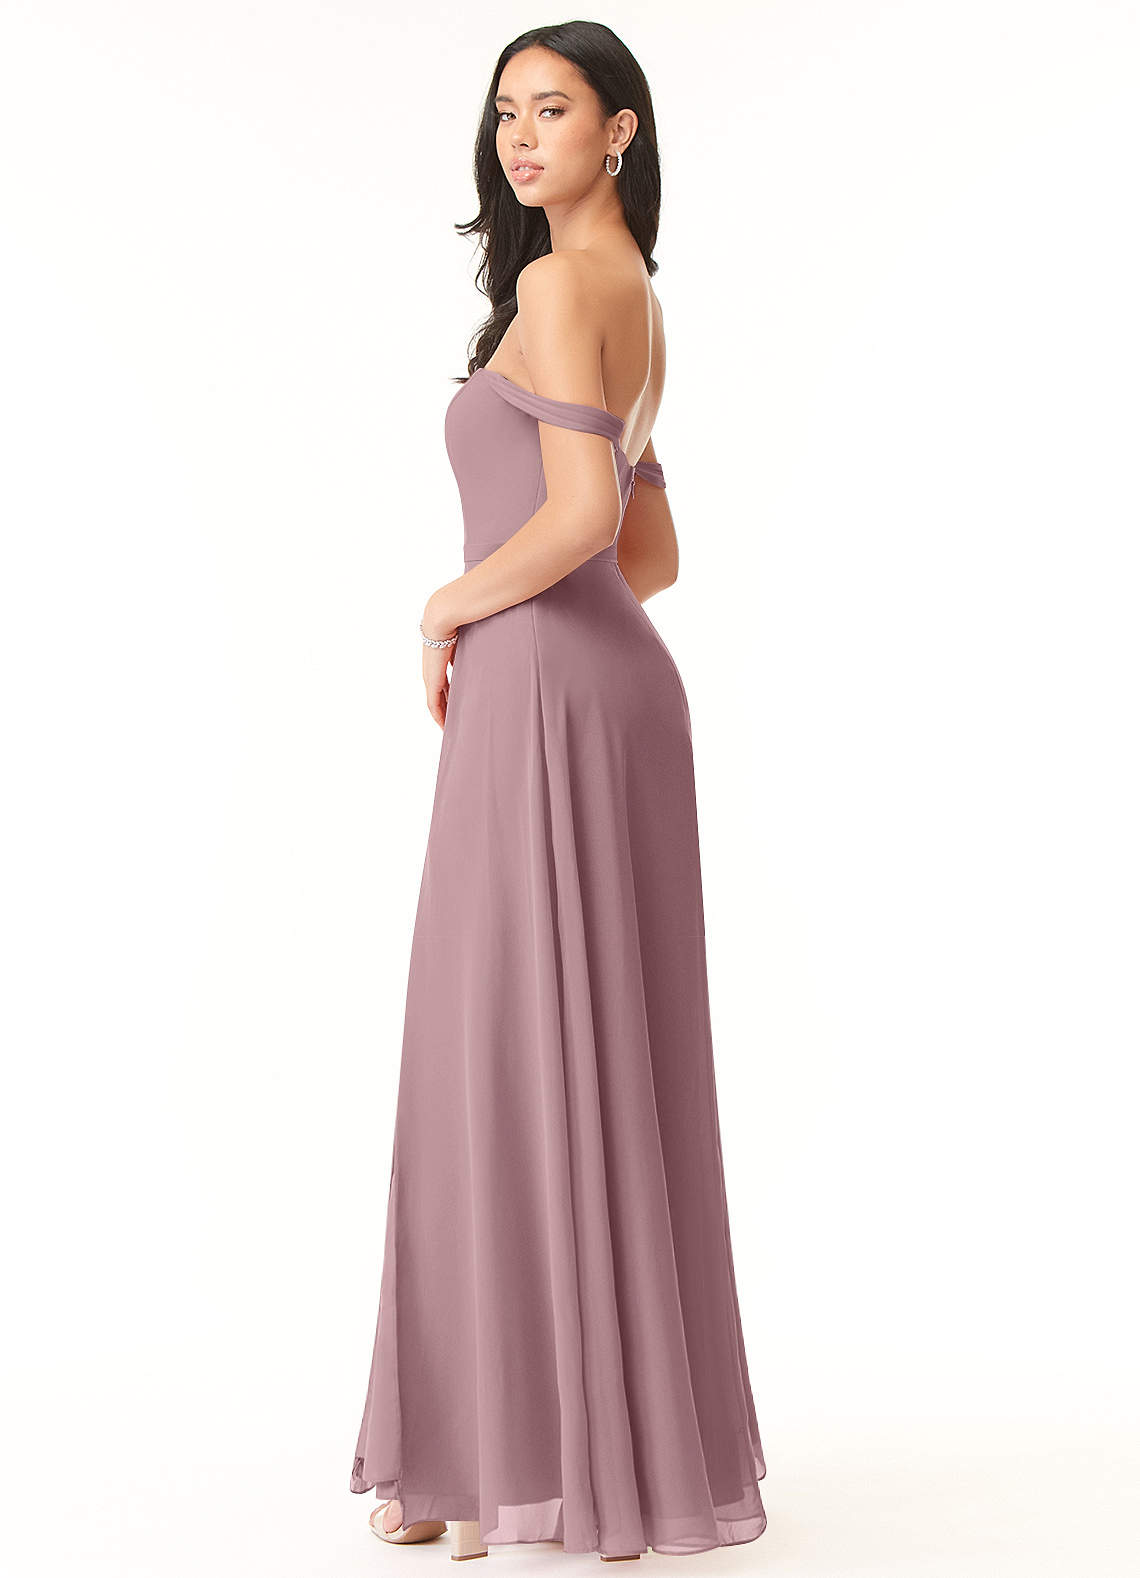 Azazie Aaron Bridesmaid Dresses A-Line Off the Shoulder Chiffon Floor-Length Dress image1